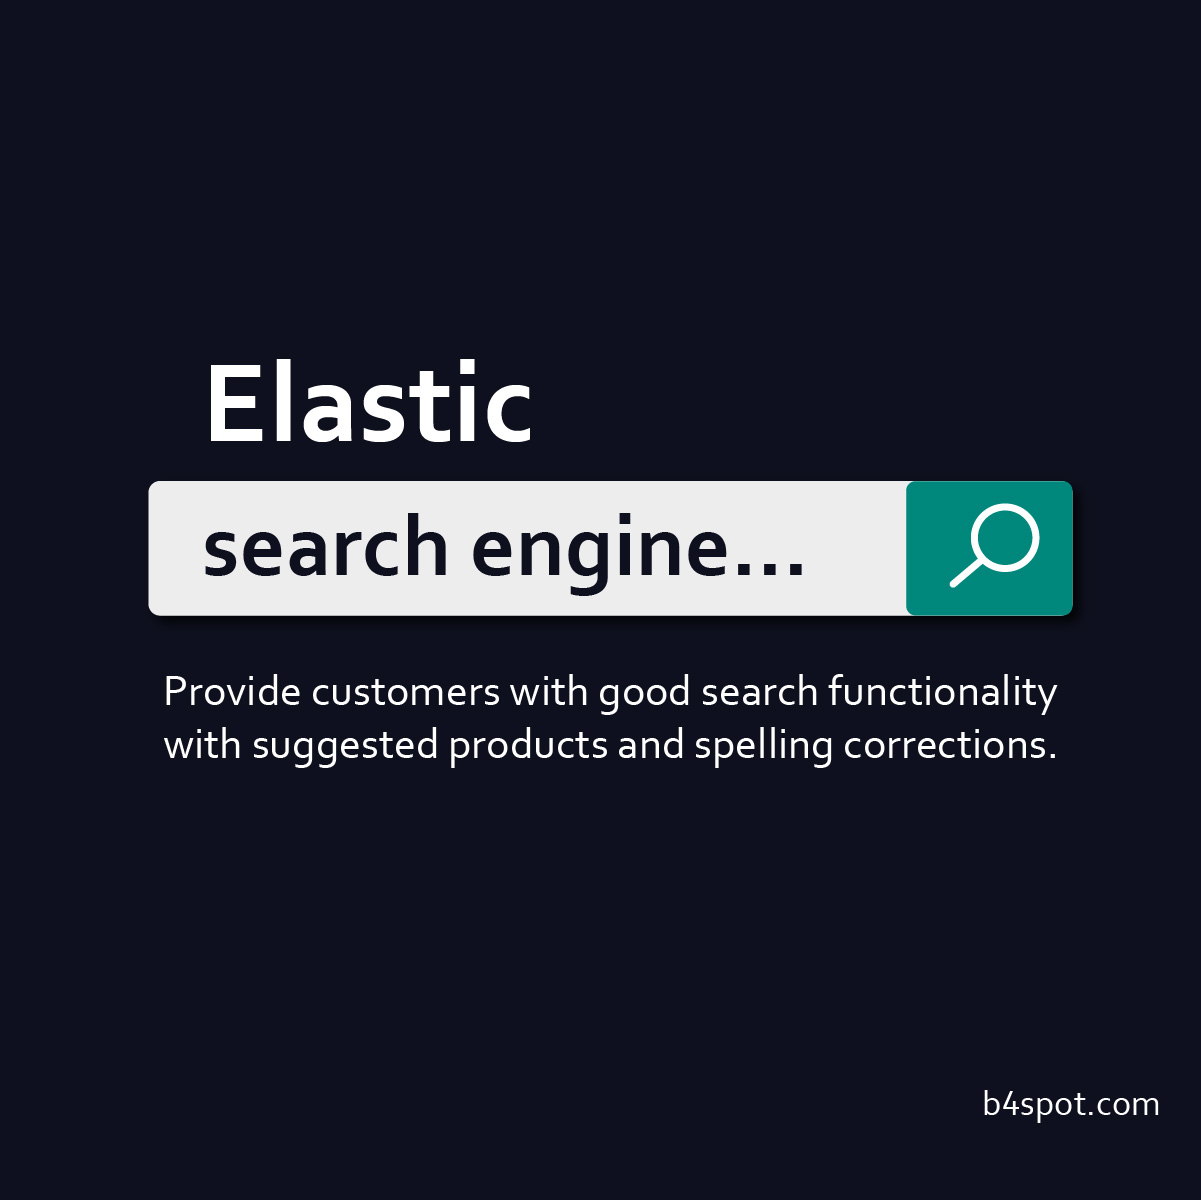 UX friendly - Elastic search engine